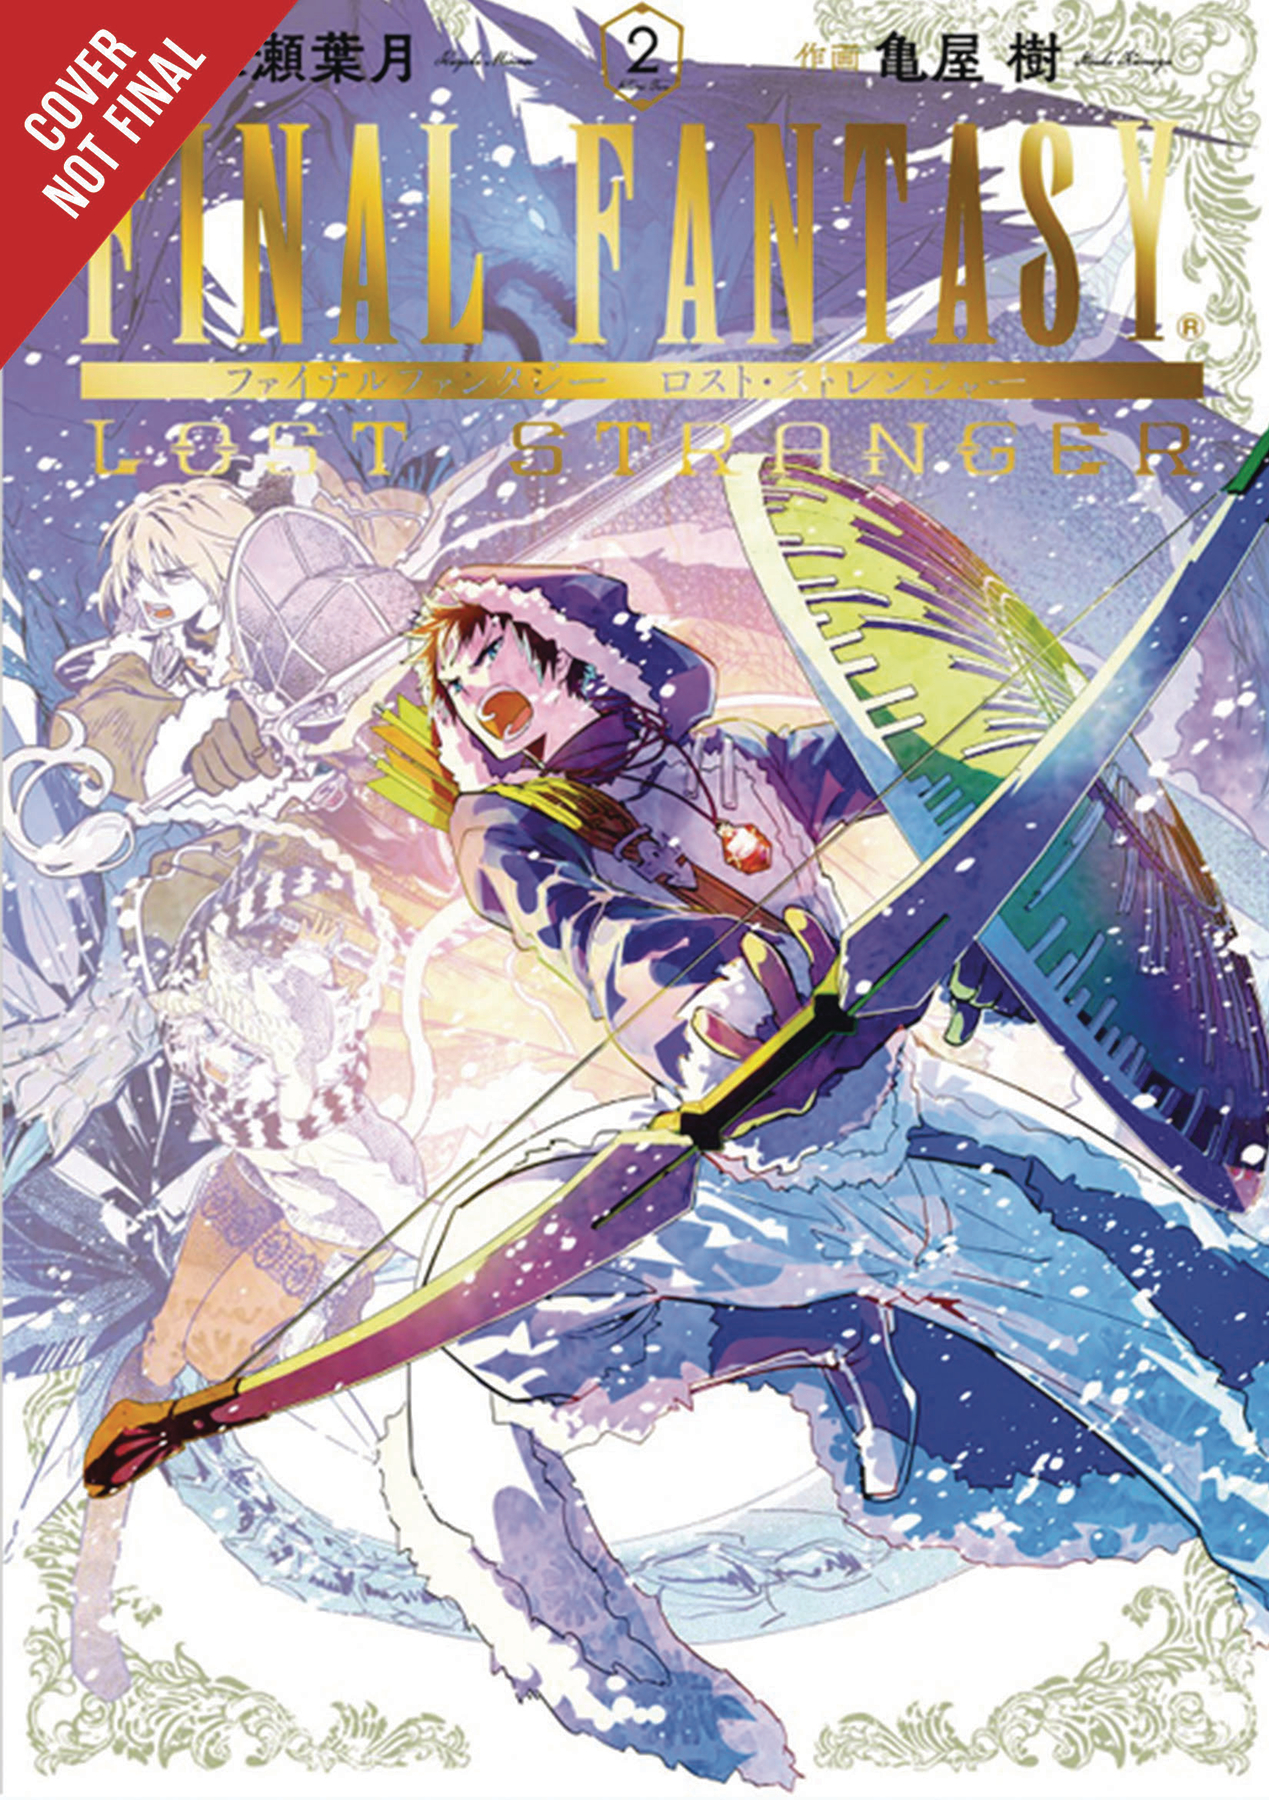 Final Fantasy Final Fantasy Lost Stranger Volume 2 From Final Fantasy By Hazuki Minase Published By Yen Press Forbiddenplanet Com Uk And Worldwide Cult Entertainment Megastore